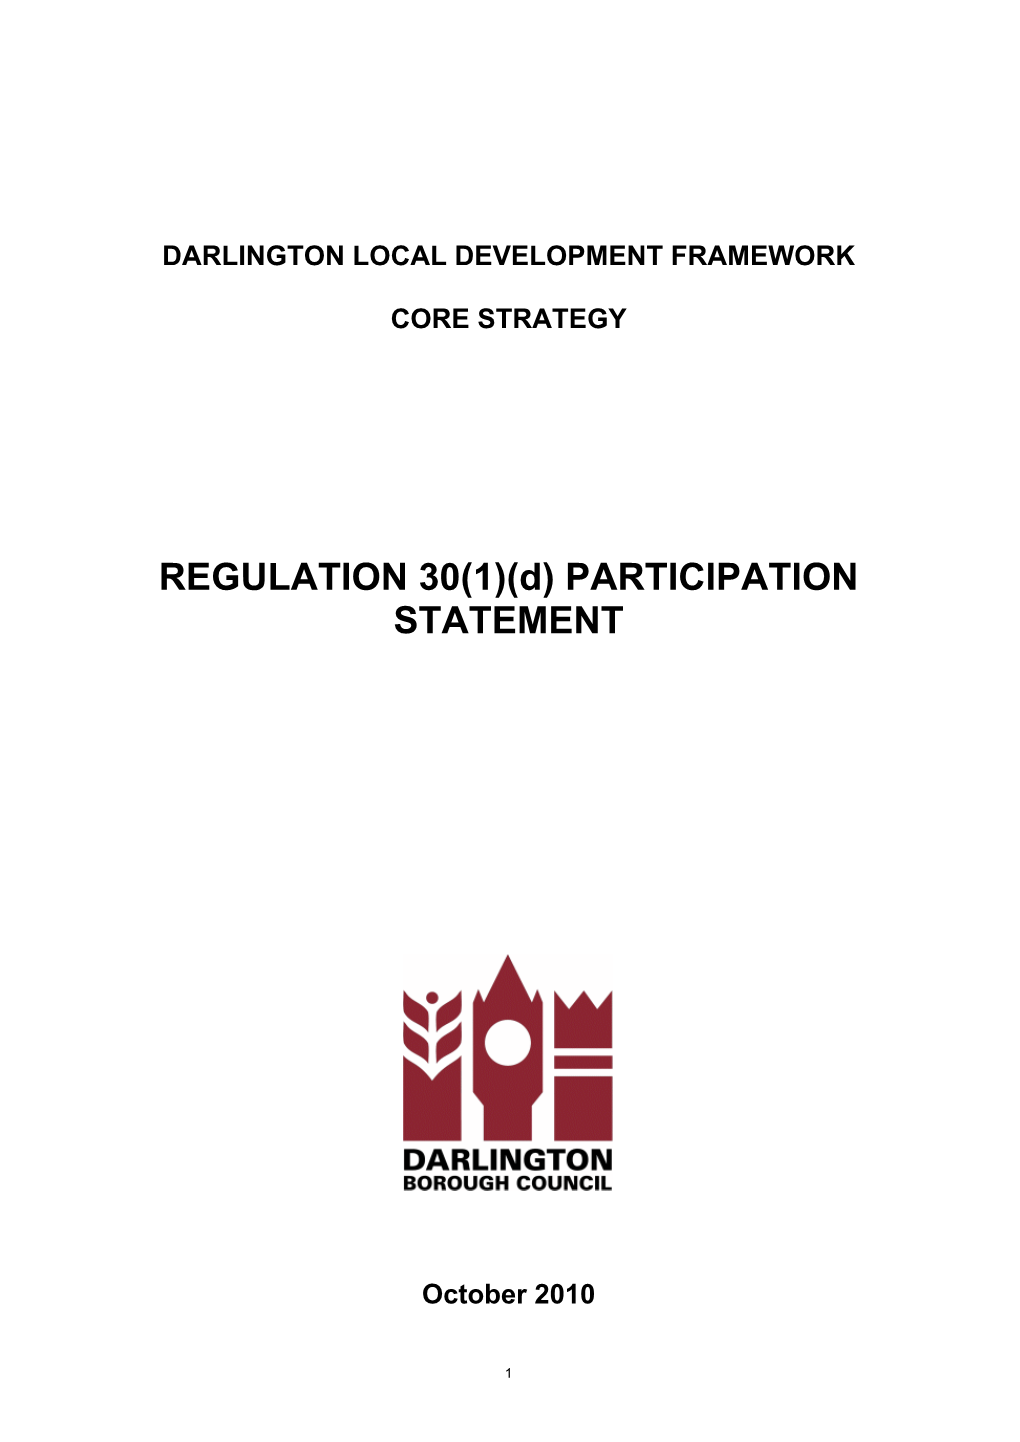 Darlington Local Development Framework Core Strategy